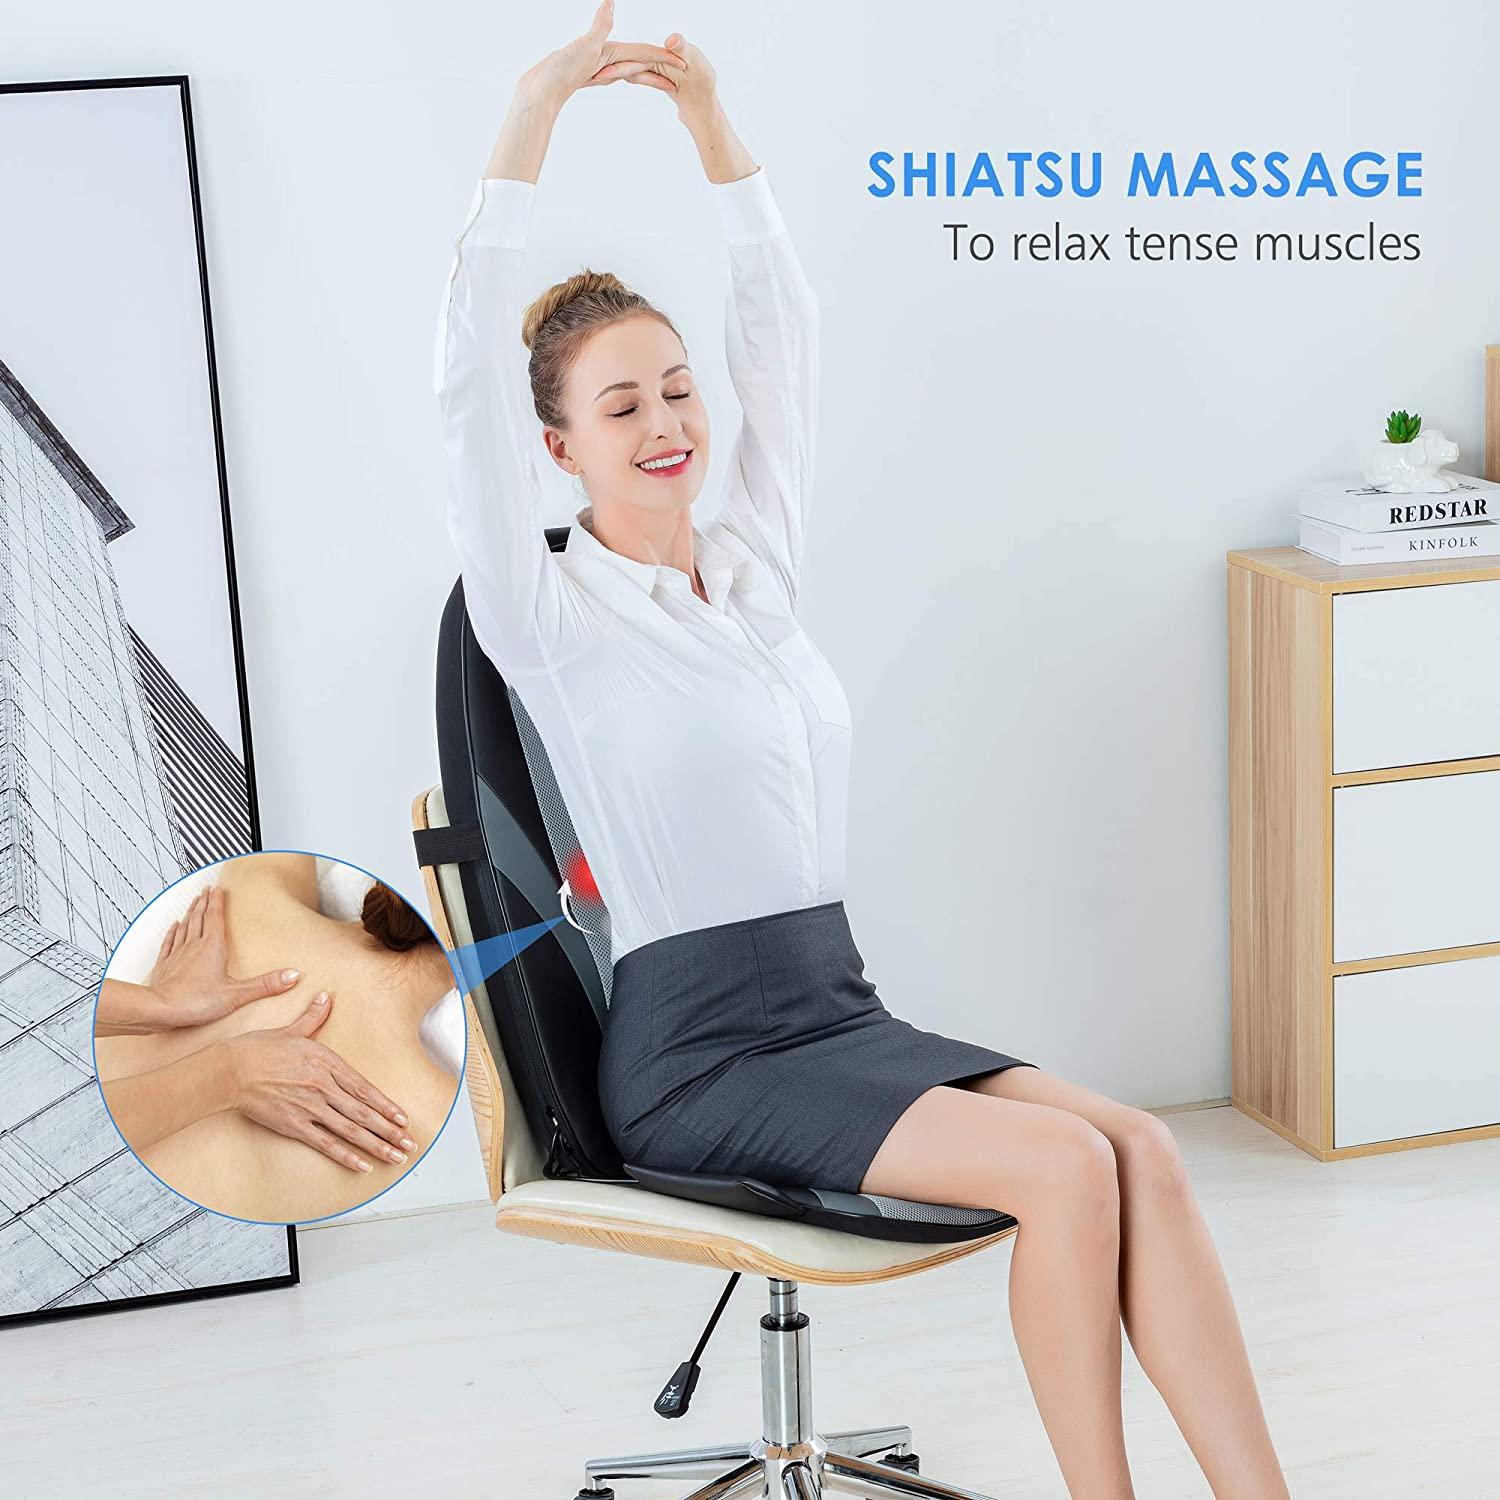 Comfier Back Massager with Heat,Shiatsu Massage Chair Pad,Deep